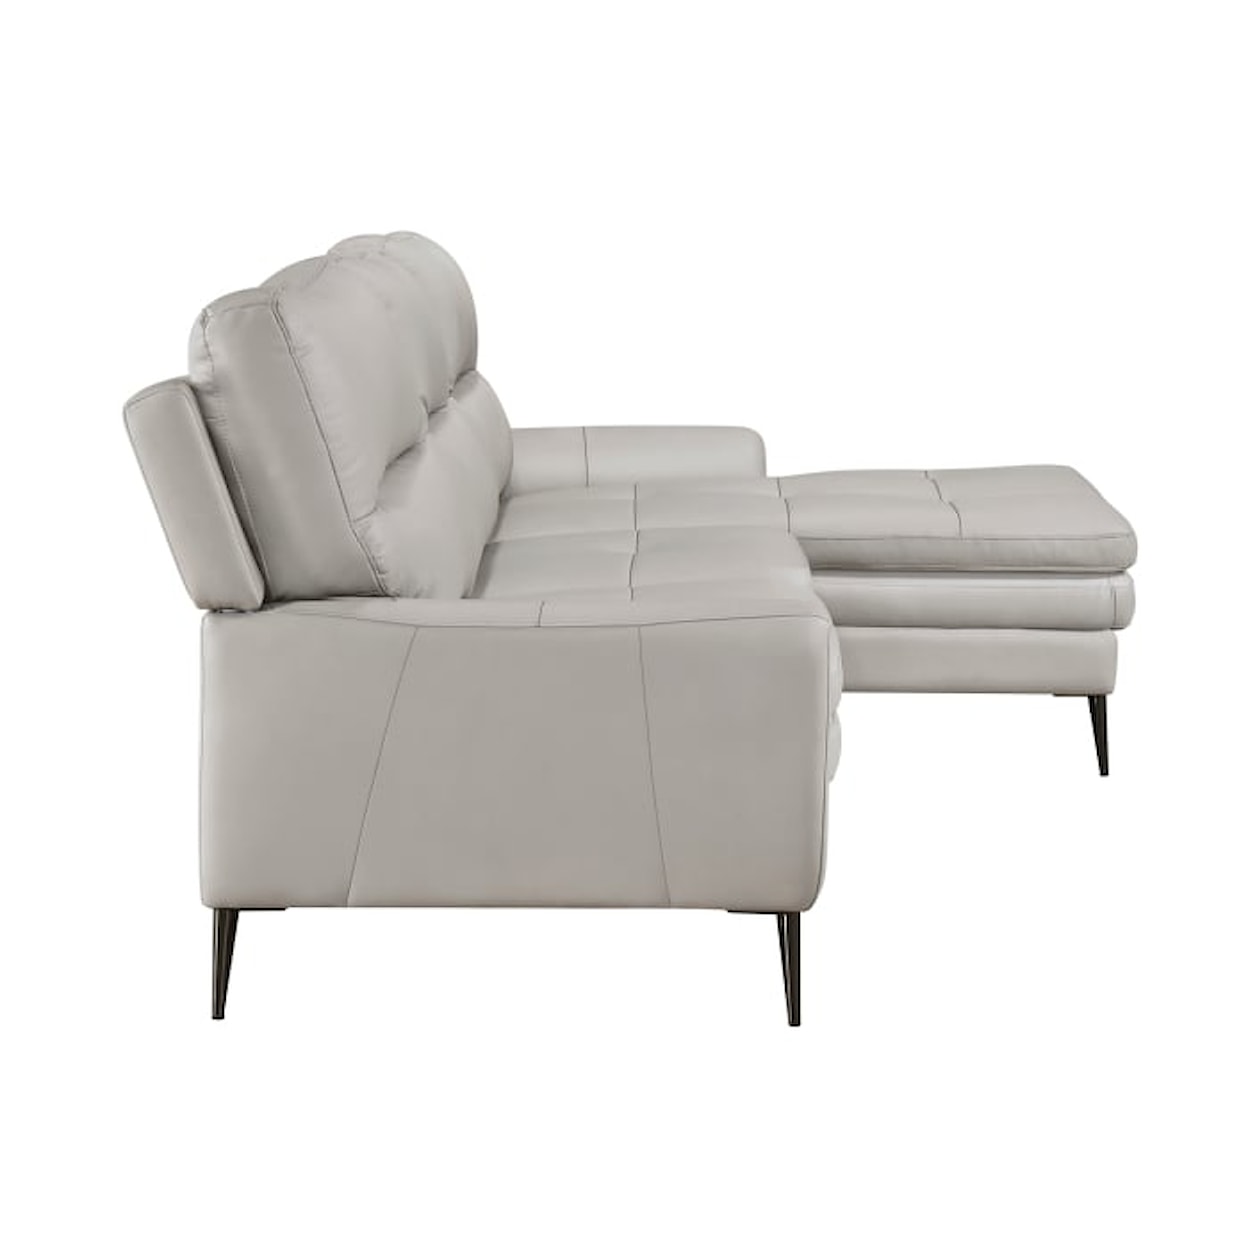 Homelegance Furniture Essex Sofa Chaise